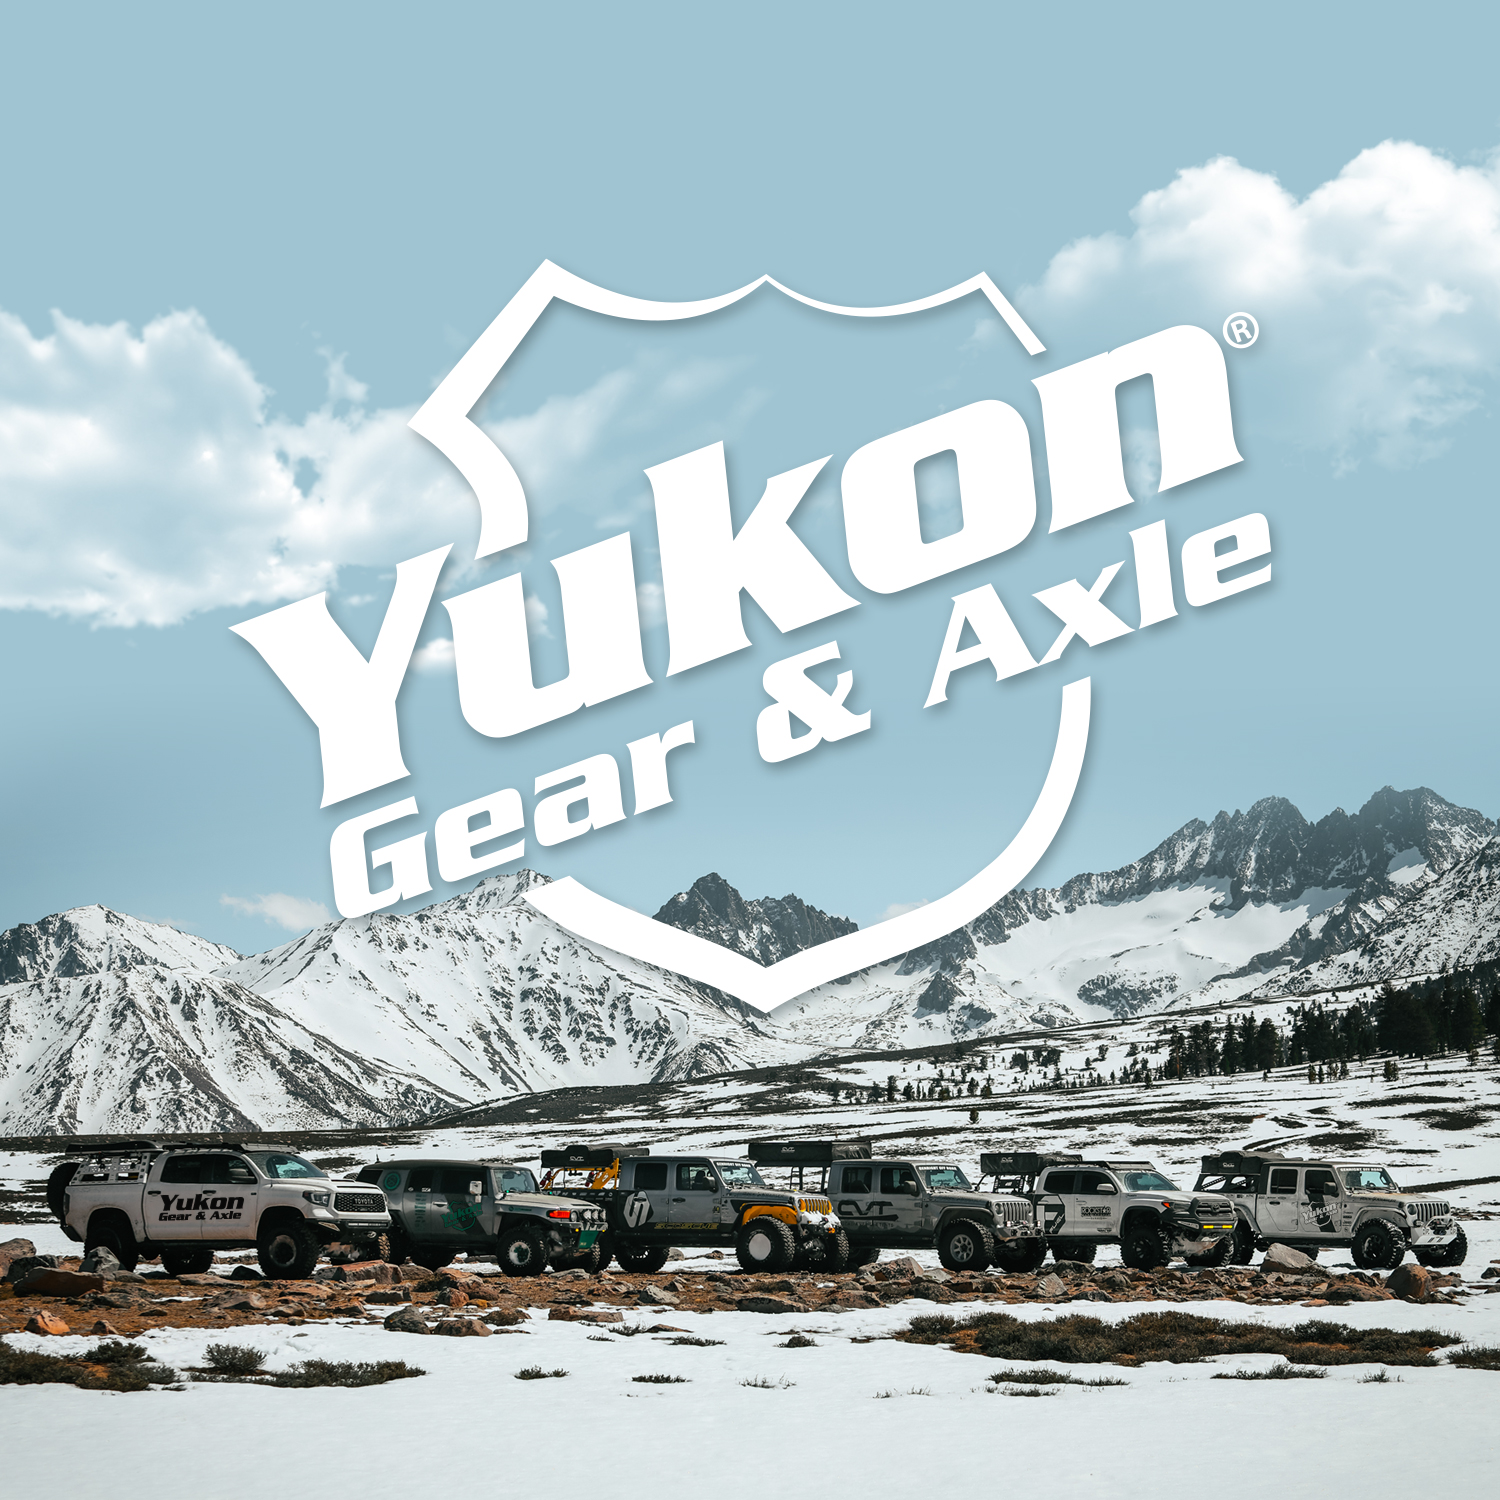 Yukon high performance replacement ring & pinion gear set, Dana 60, 4.88 thick 